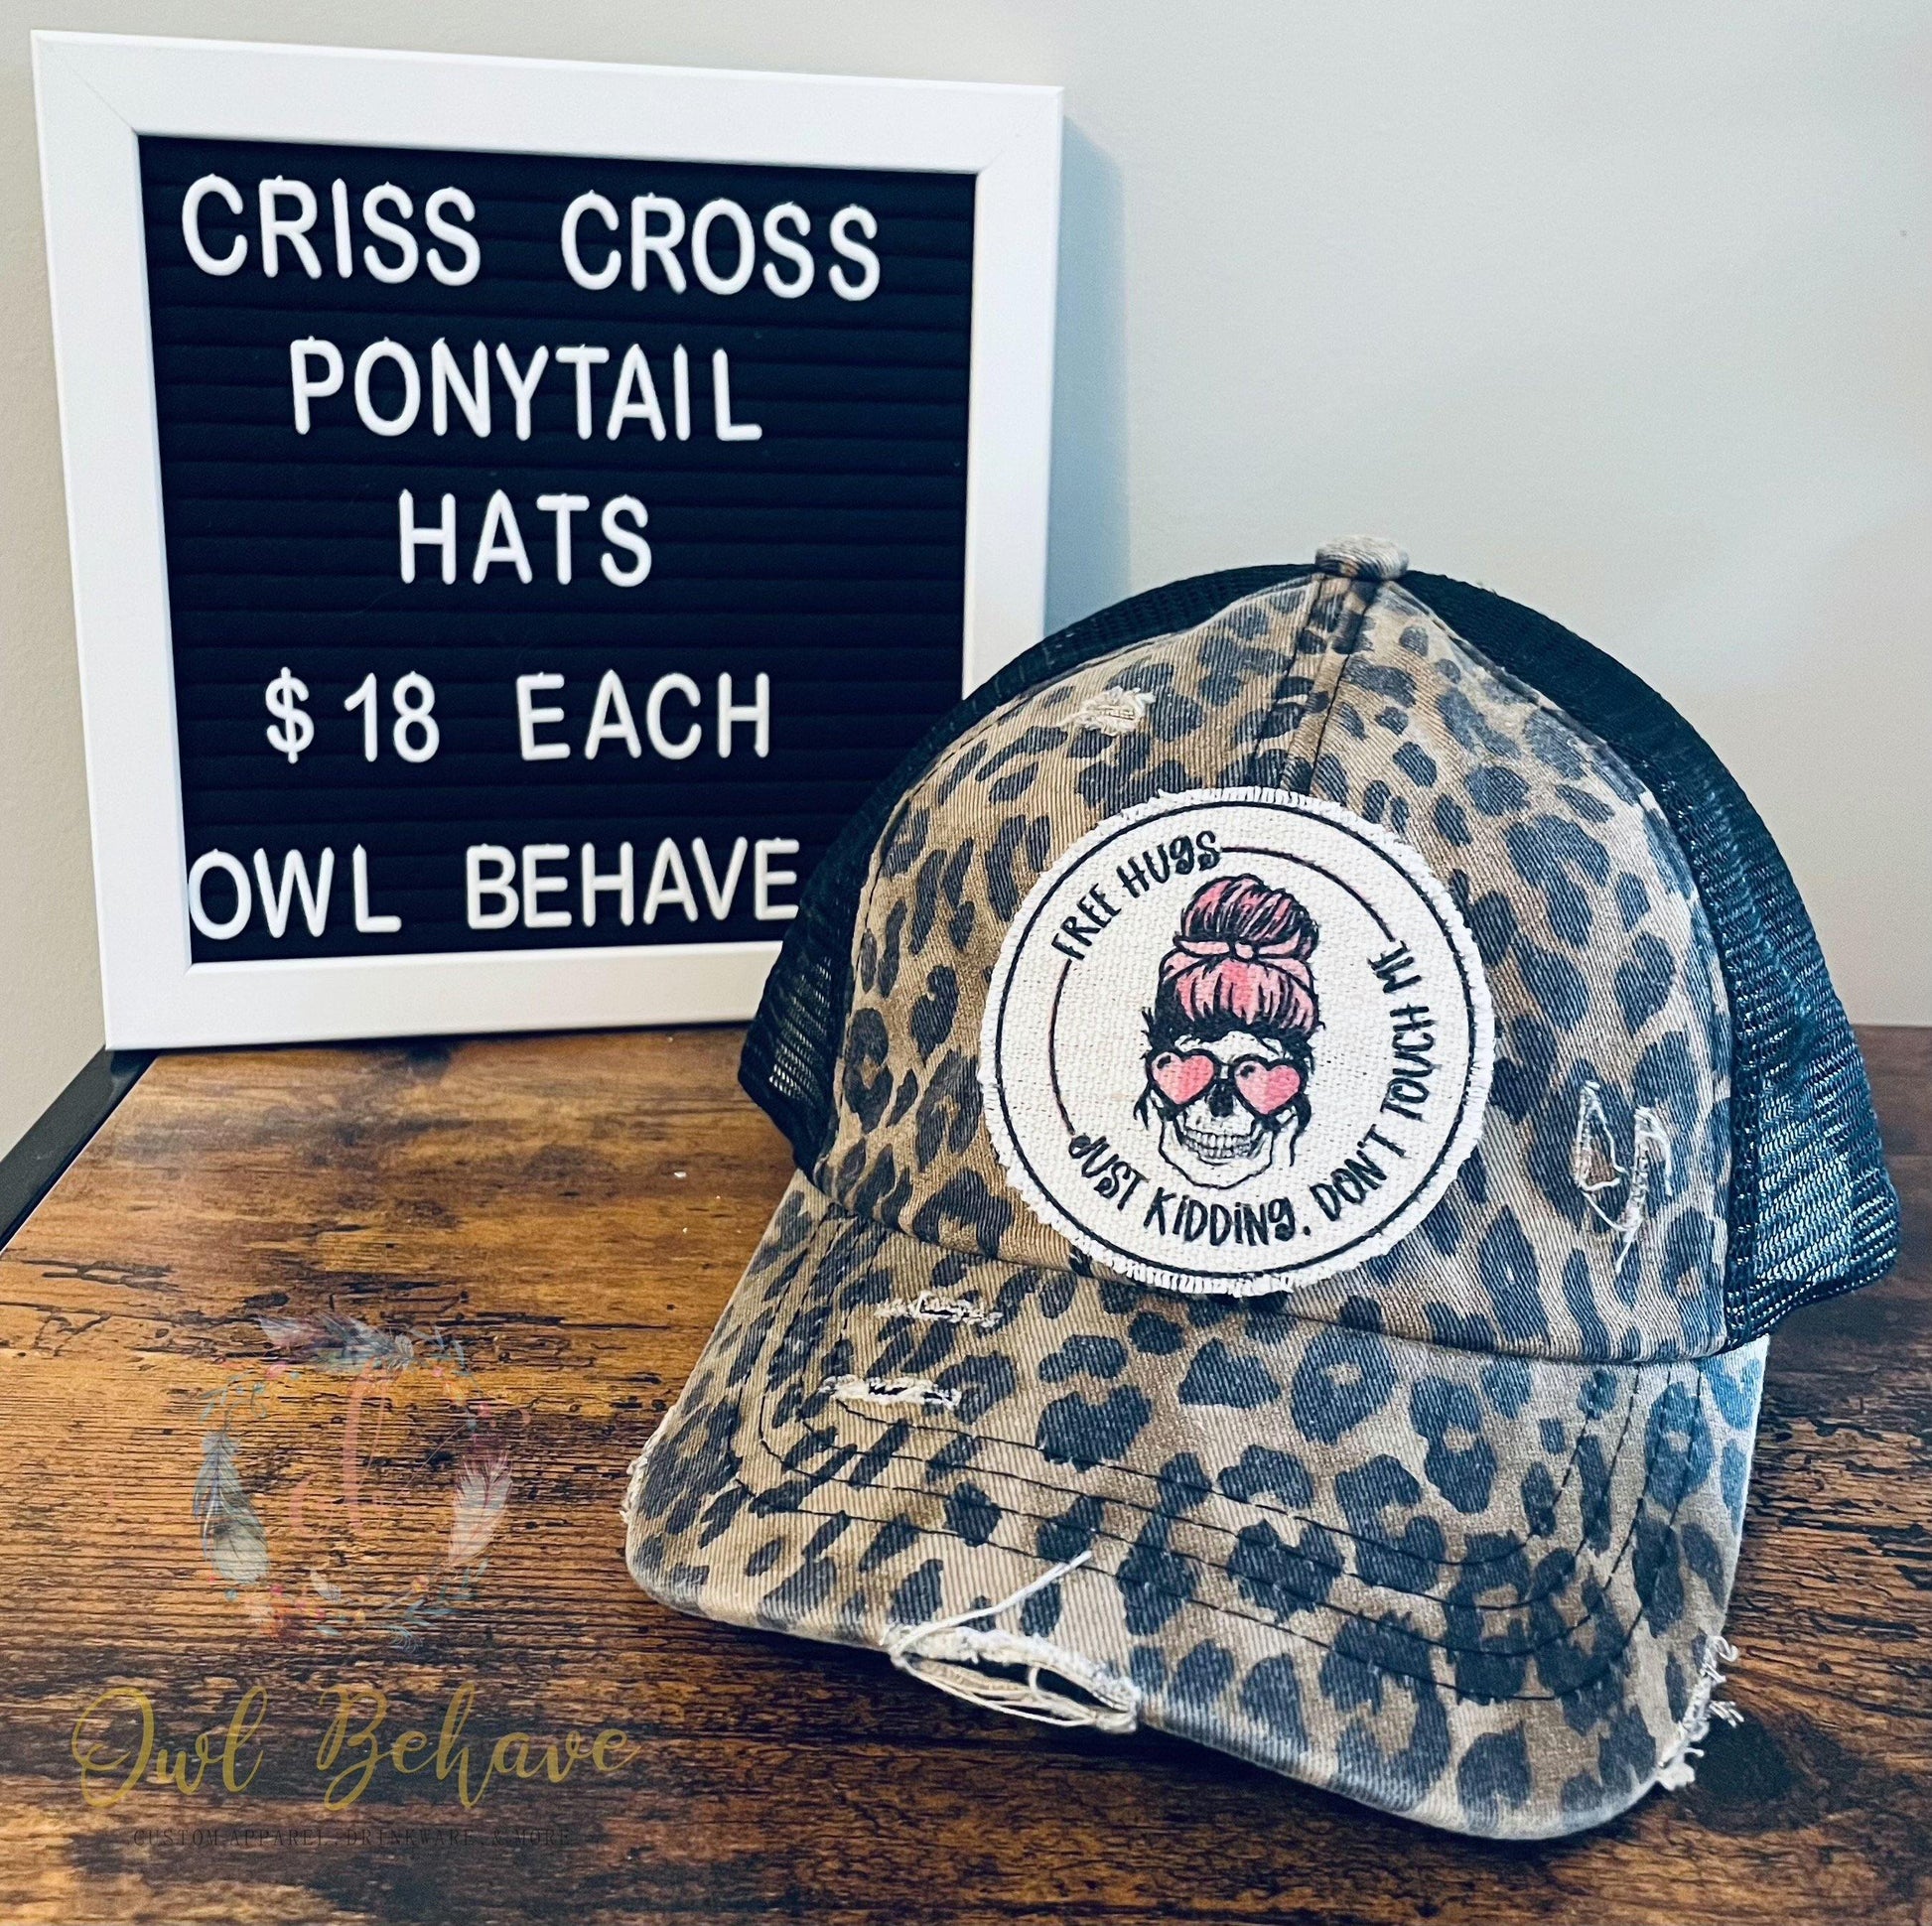 Free Hugs Criss Cross Ponytail Hat - OwlBehave 